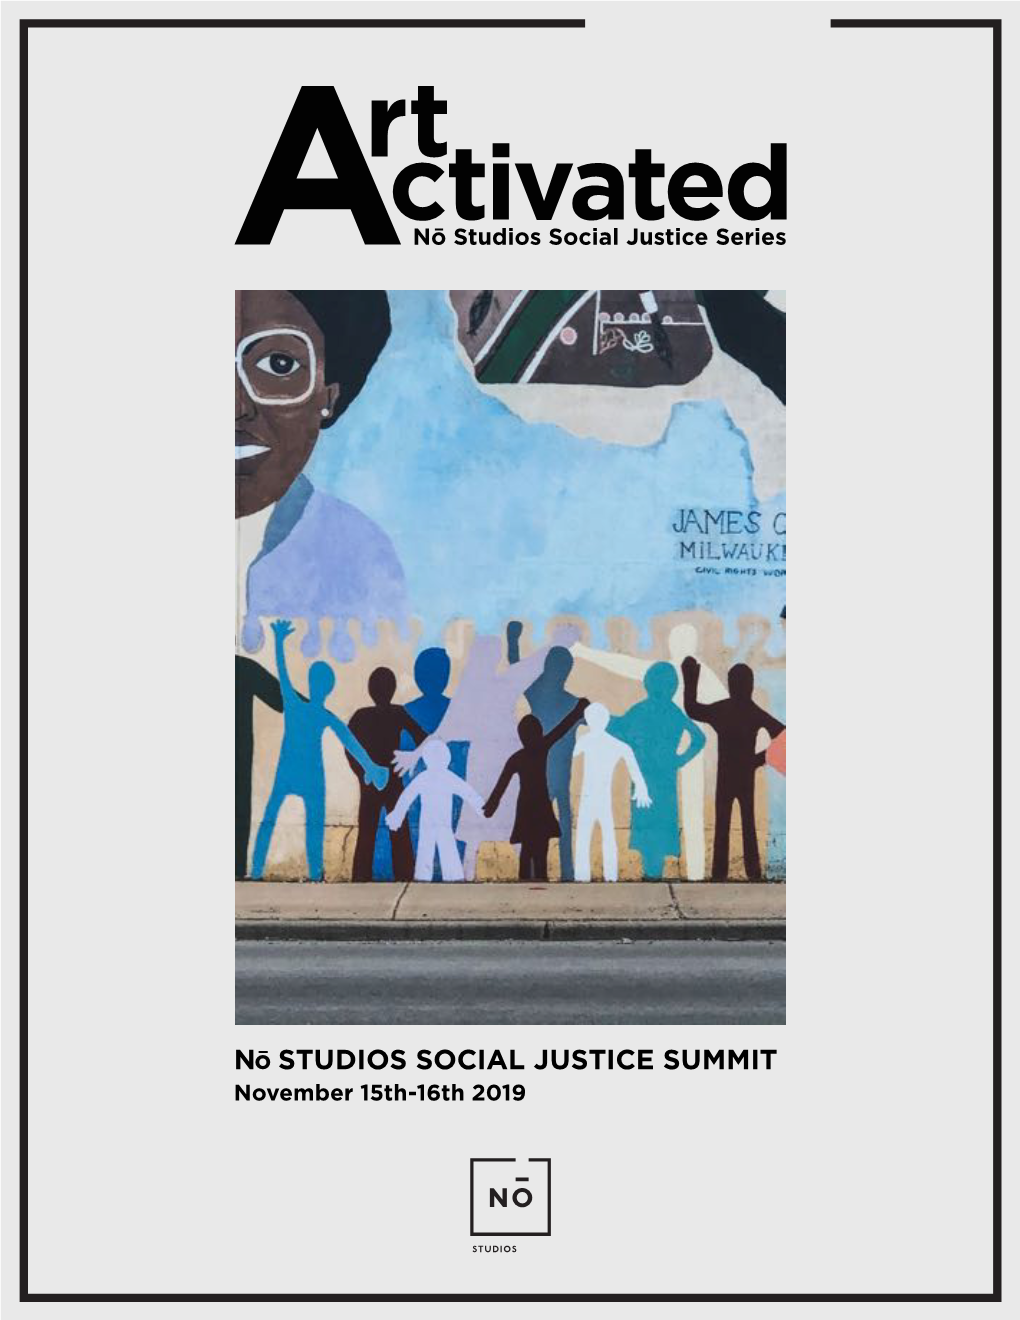 N Studios Social Justice Summit